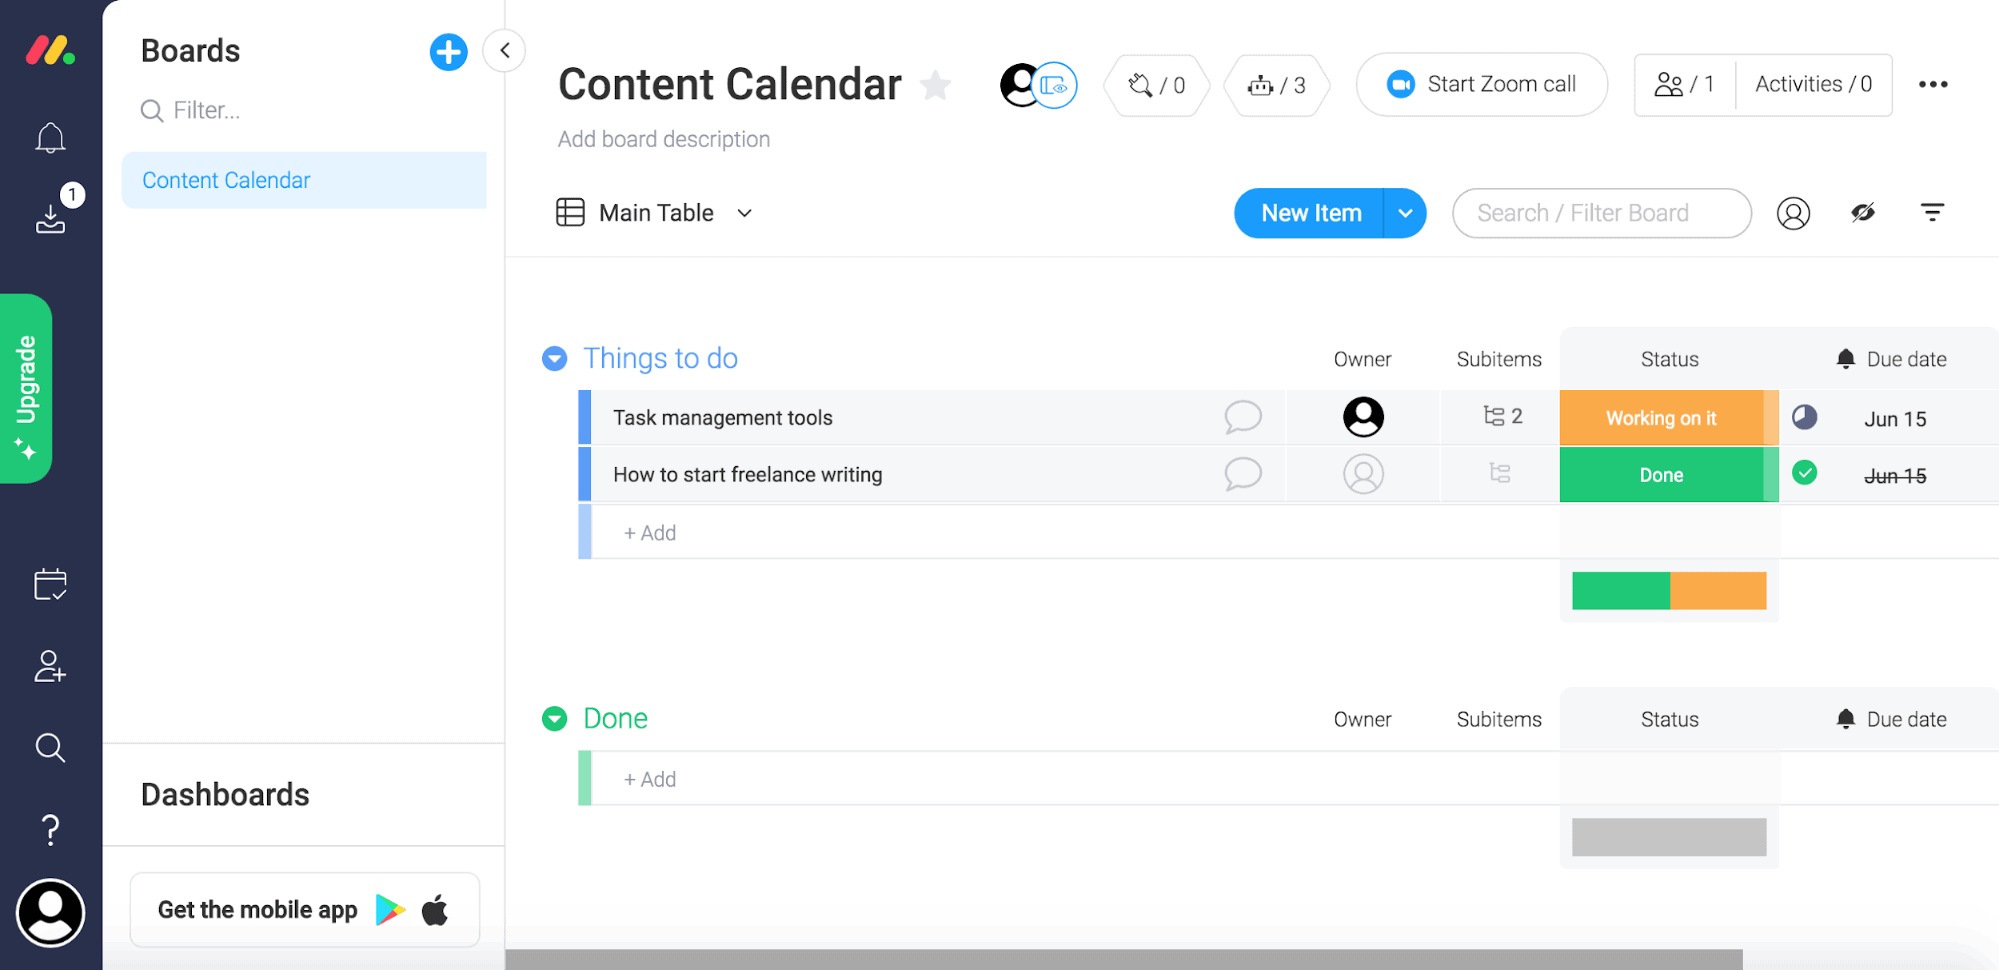 Time management tools - Monday.com Content Calendar